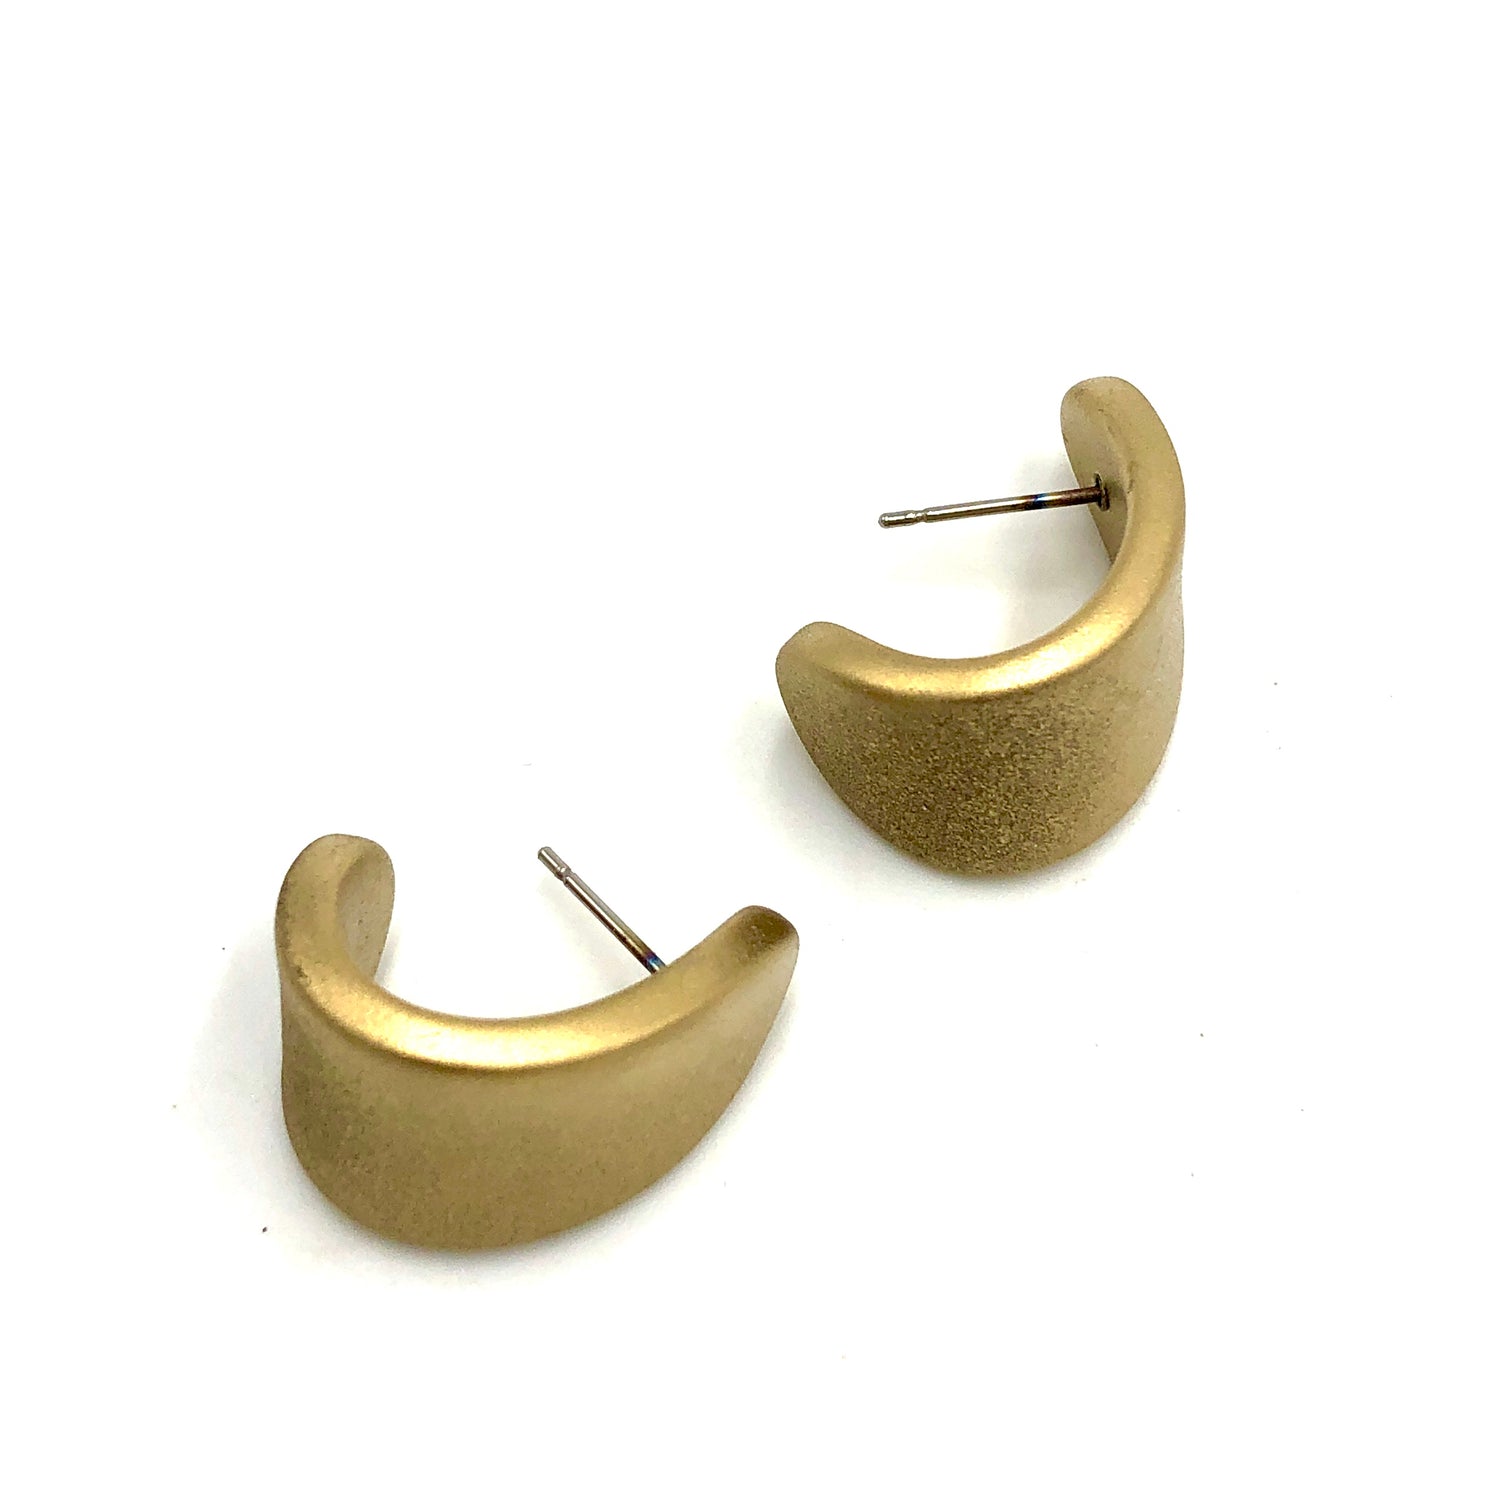 Shabby Metallic Gold Curled Petal Stud Earrings